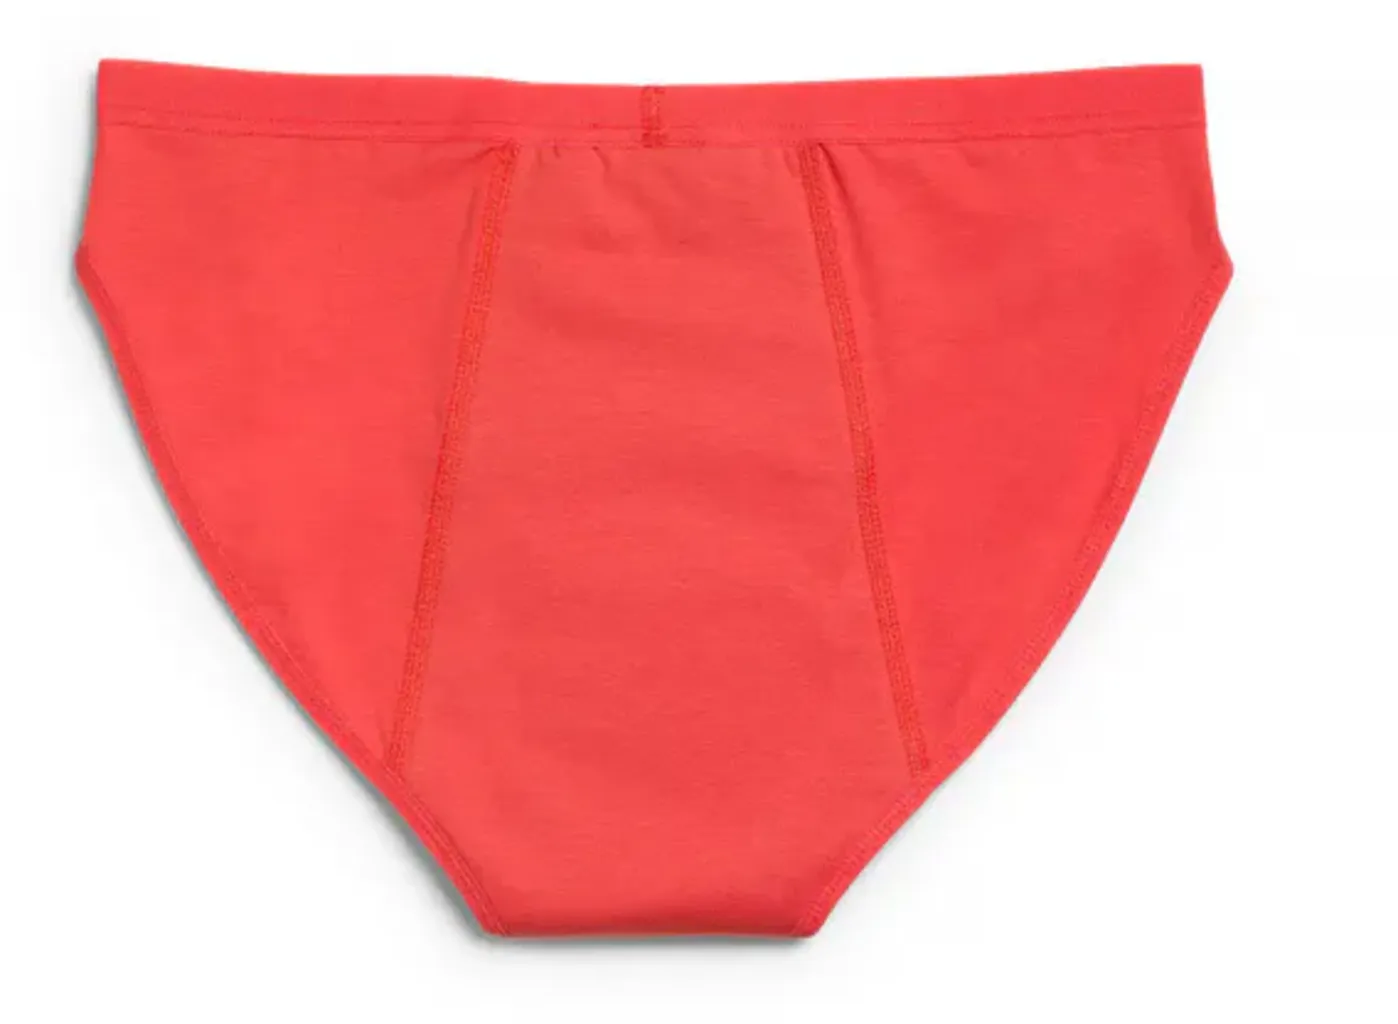 Classic period panty for teens - Medium absorption, Panties